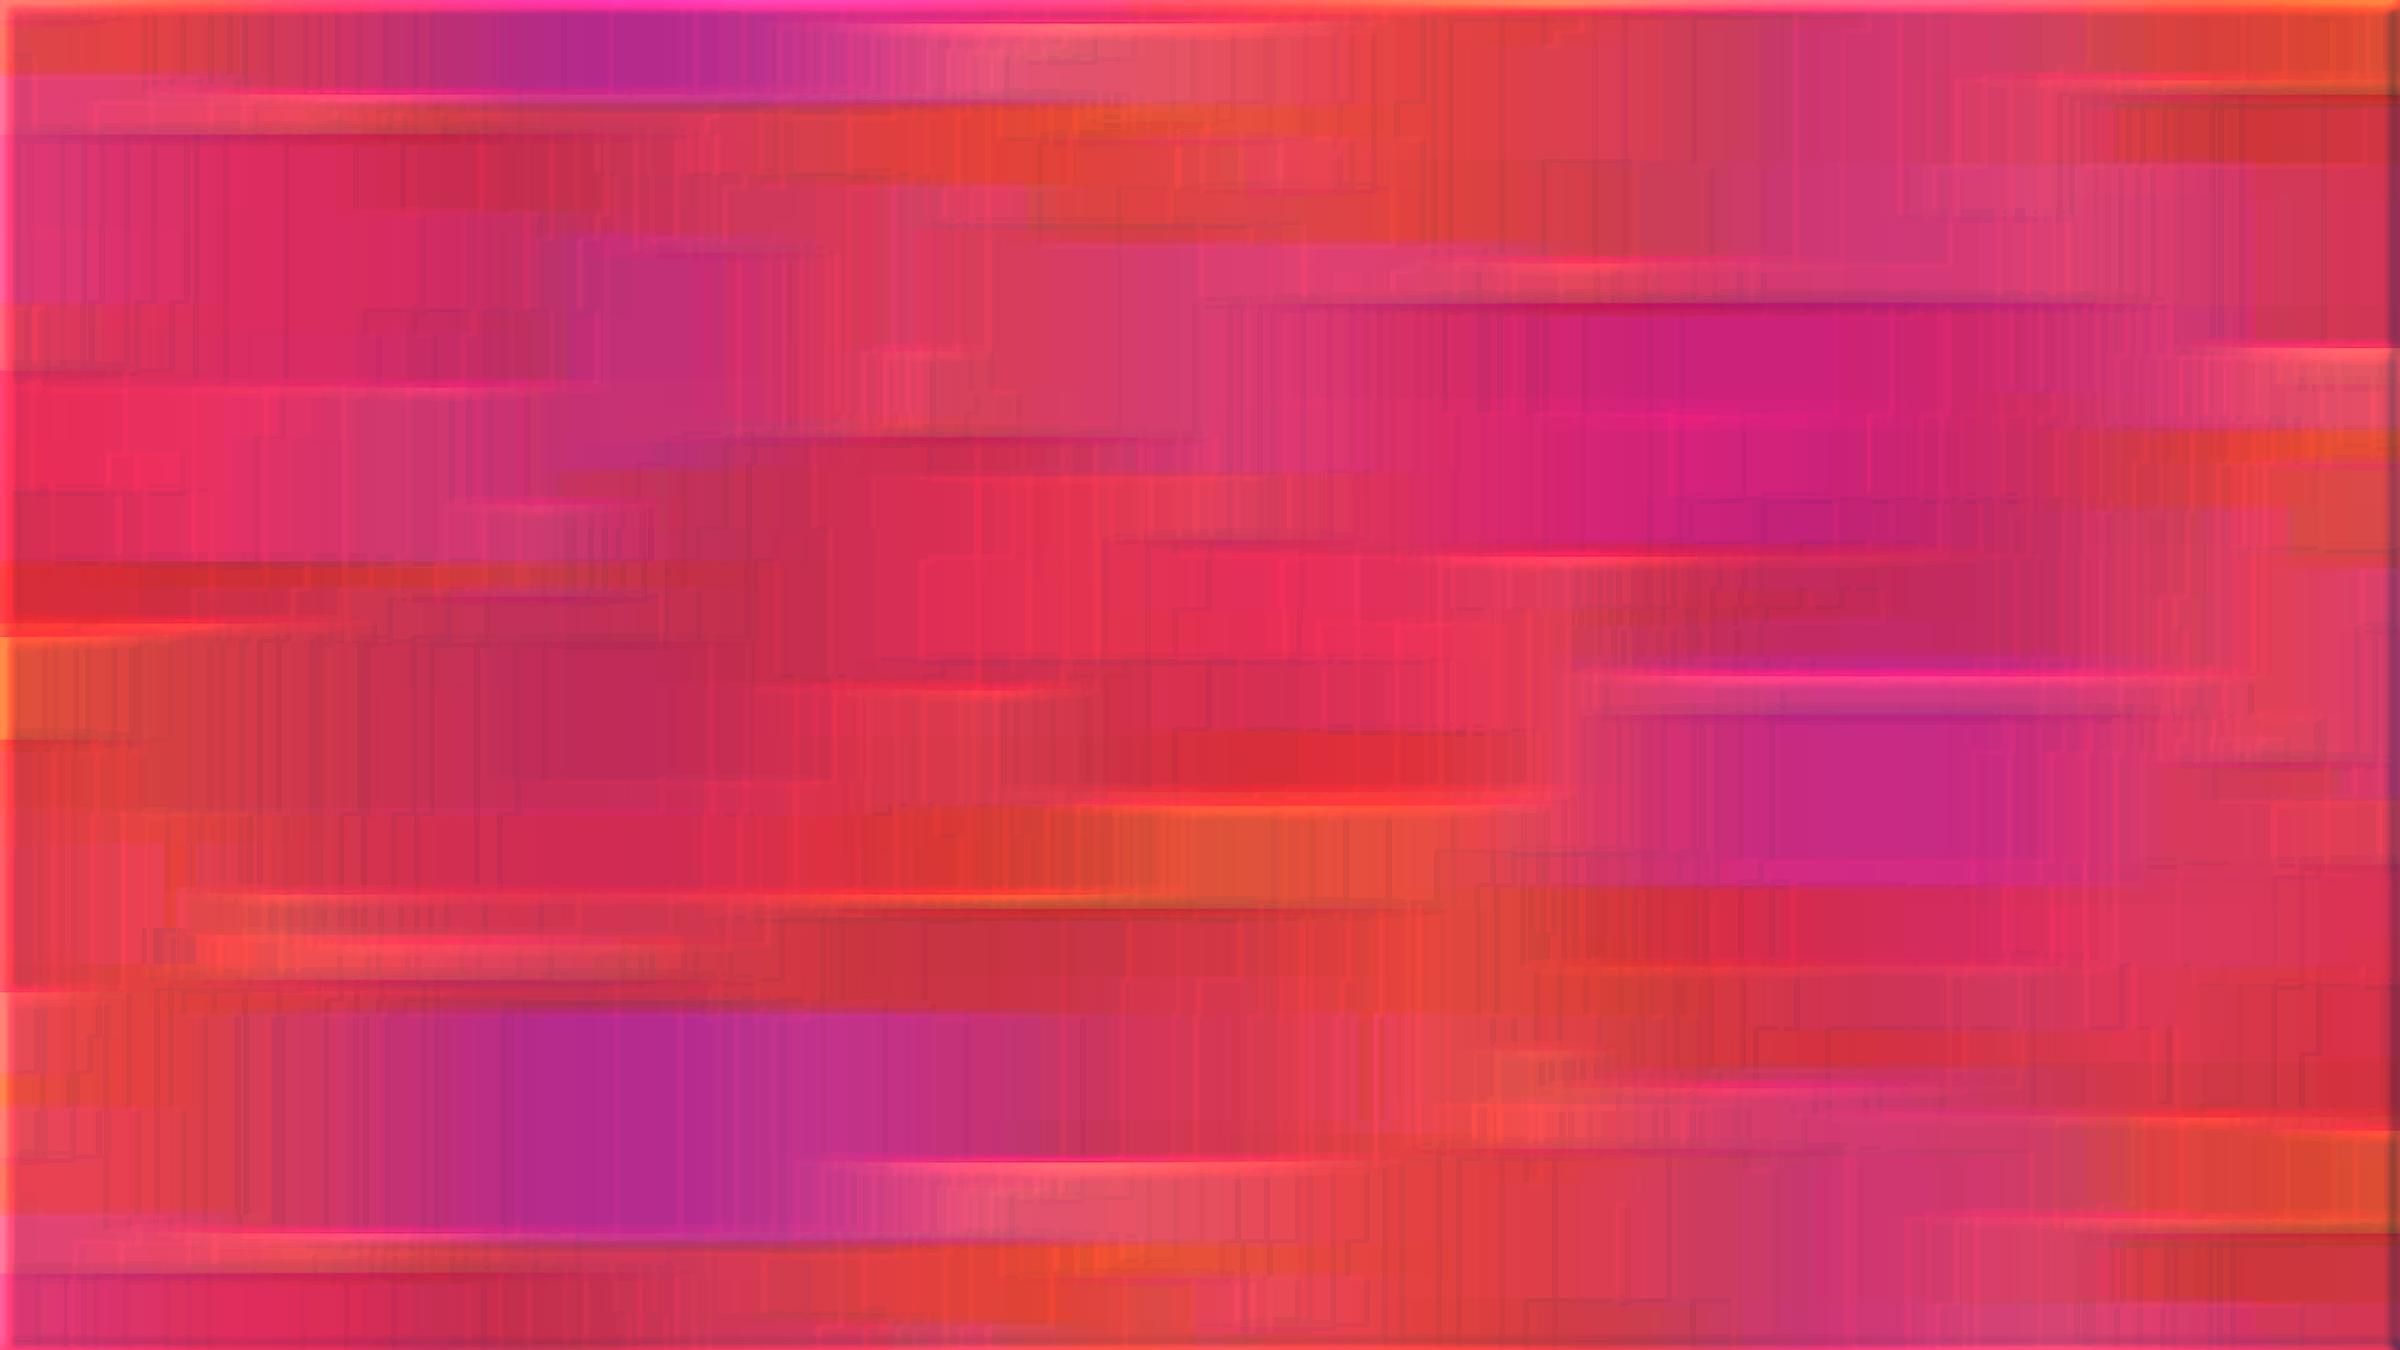 Glitch background with vertical lines - Glitch